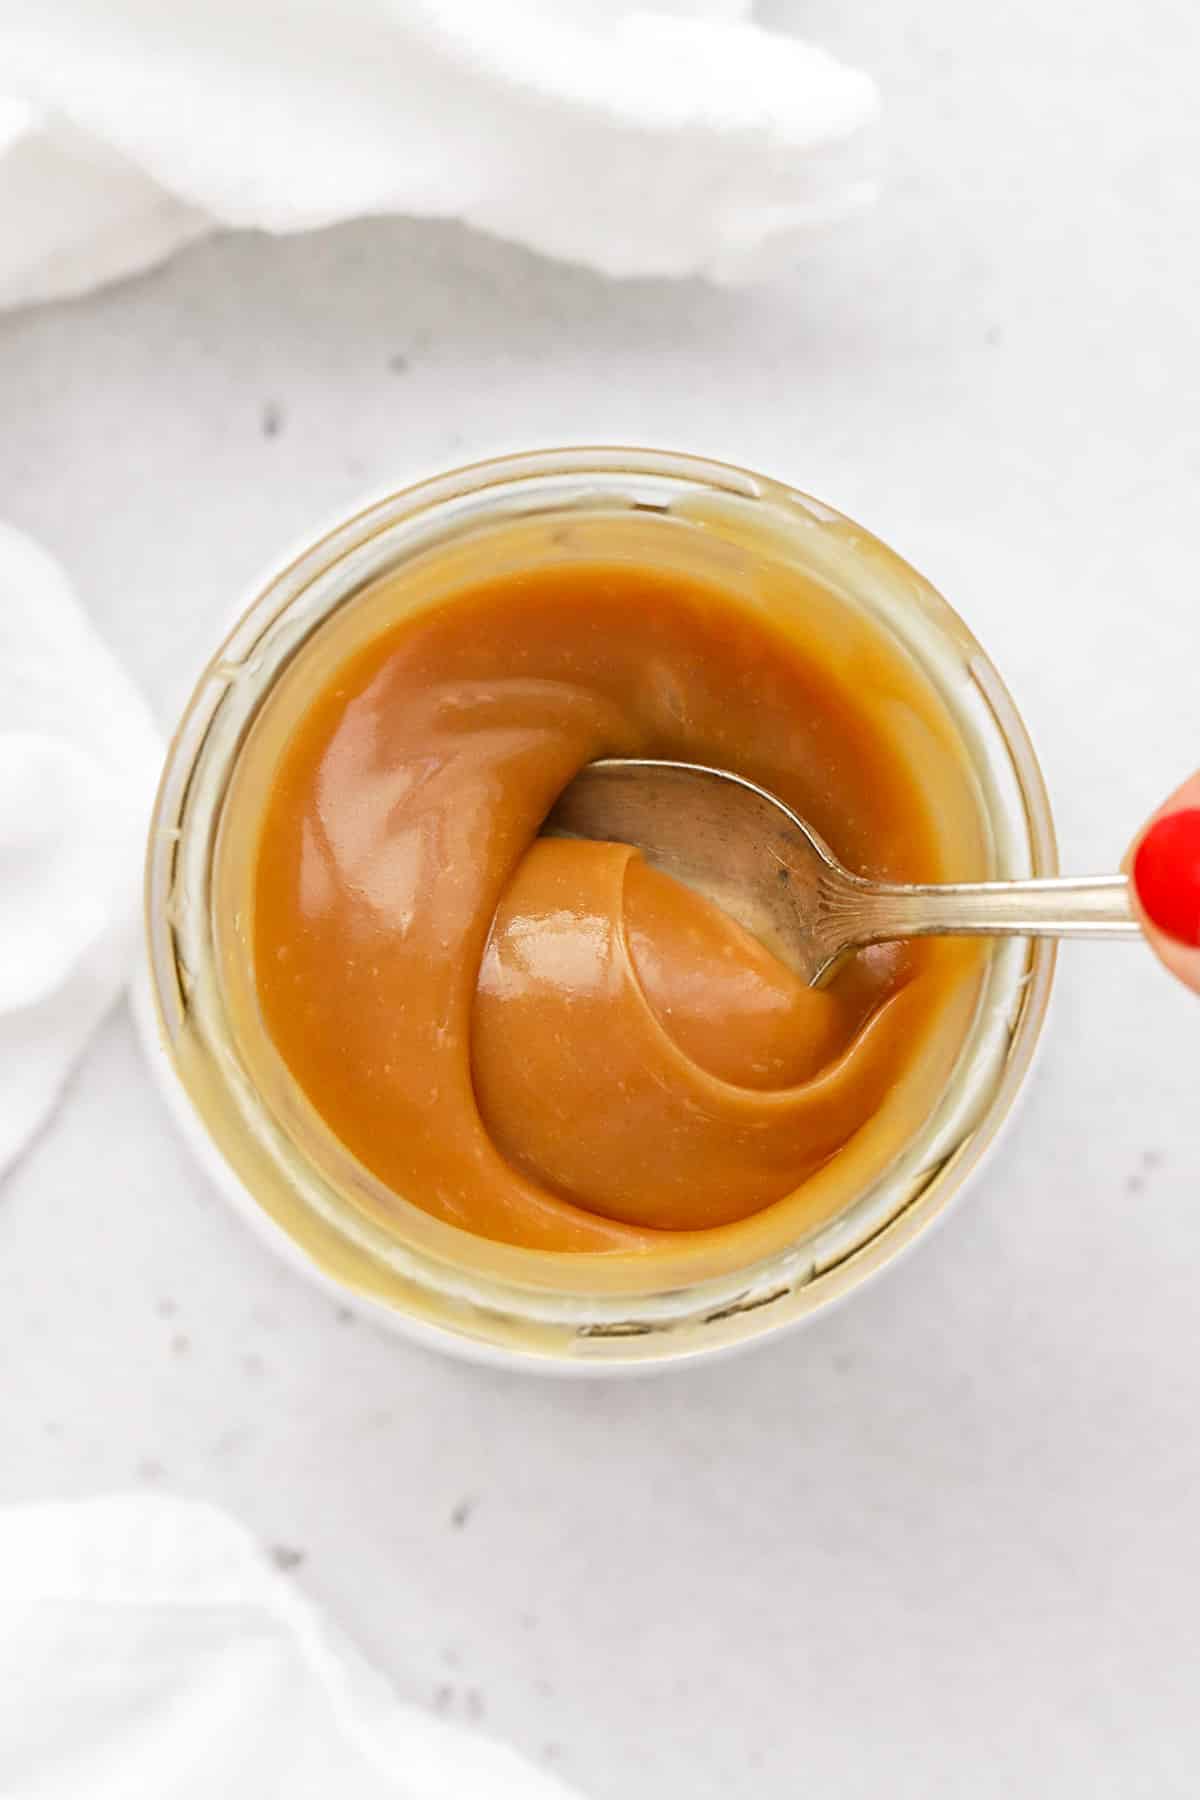 Using a spoon to stir easy homemade caramel sauce